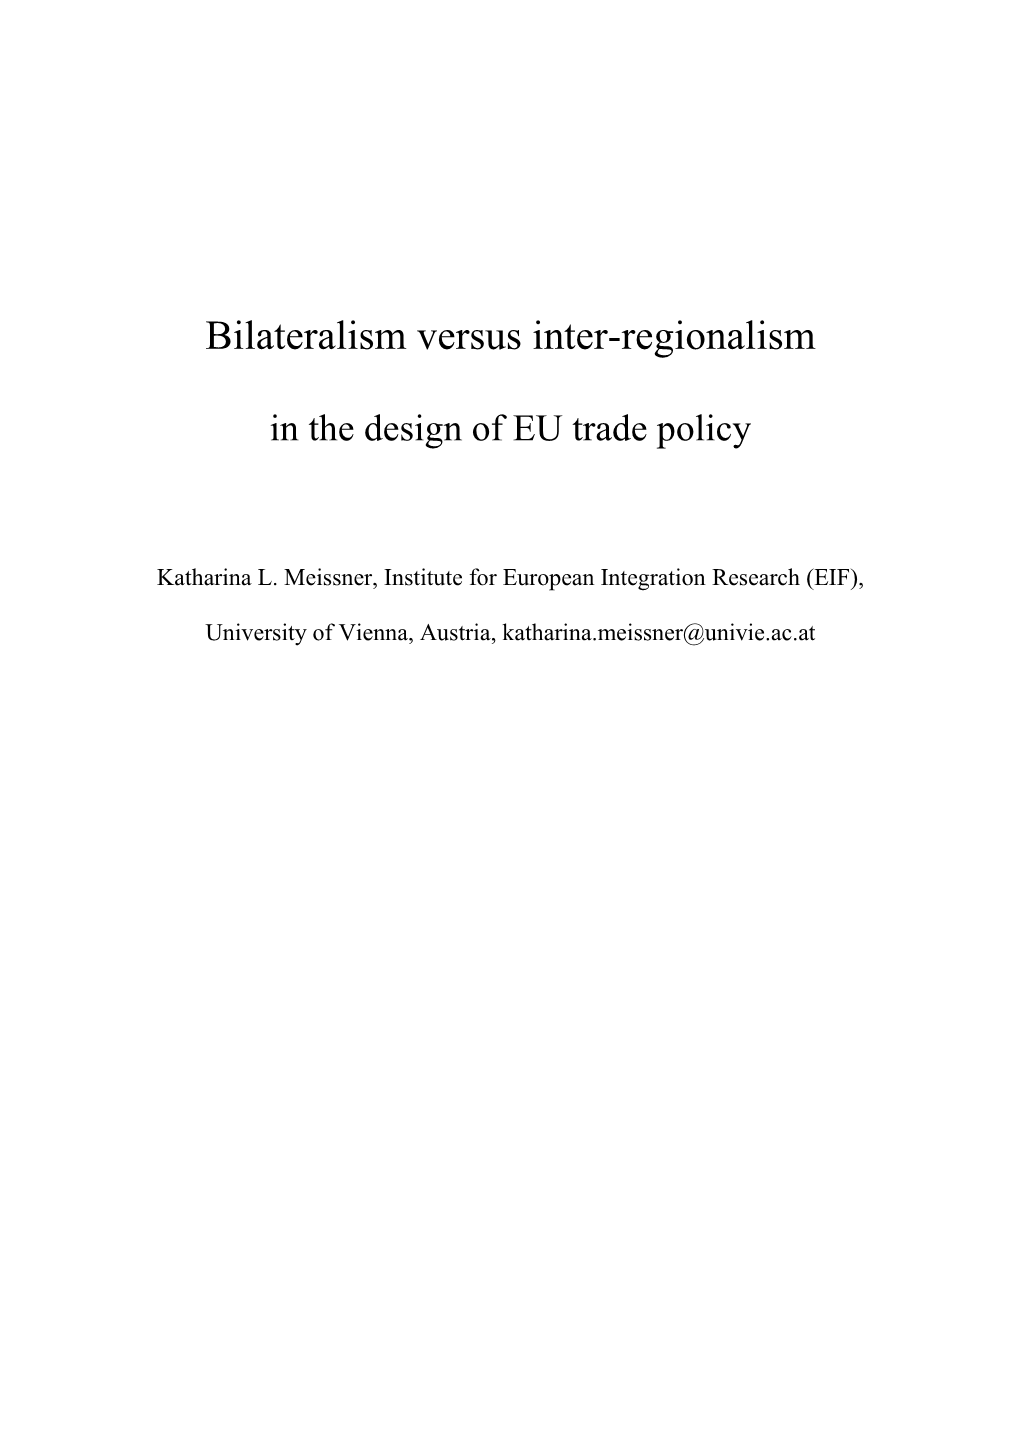 Bilateralism Versus Inter-Regionalism